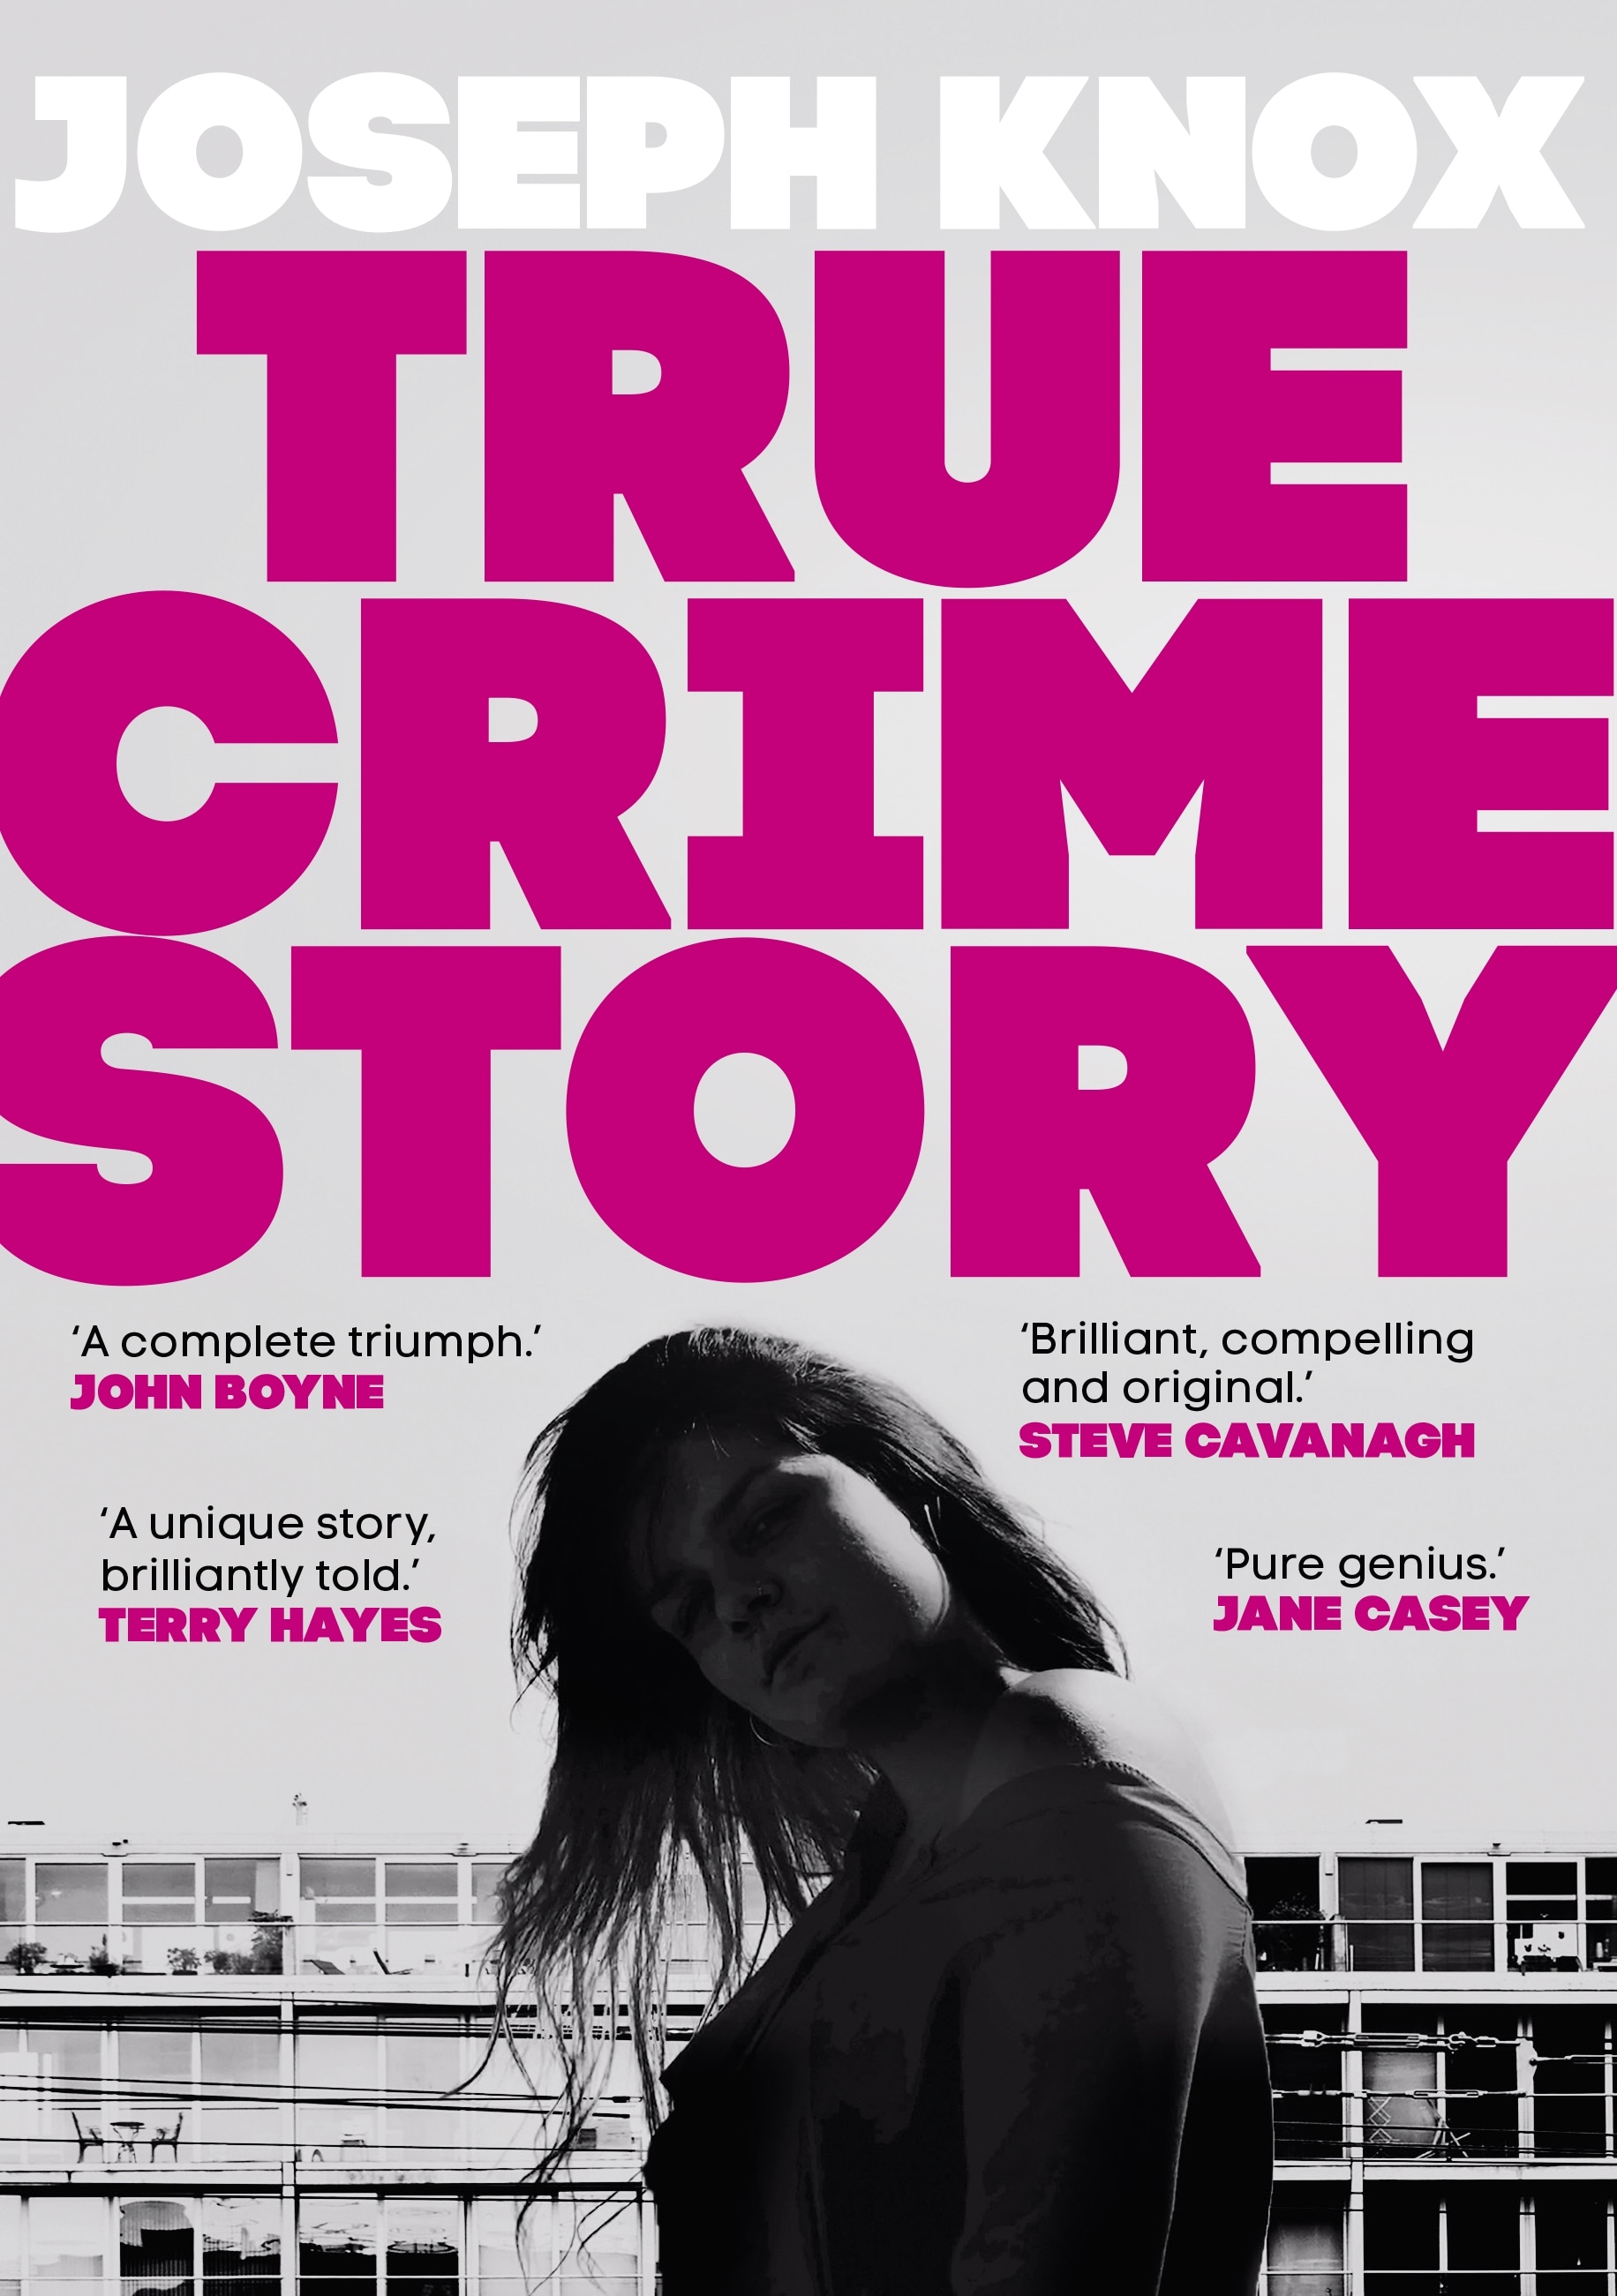 Book “True Crime Story” by Joseph Knox — June 17, 2021